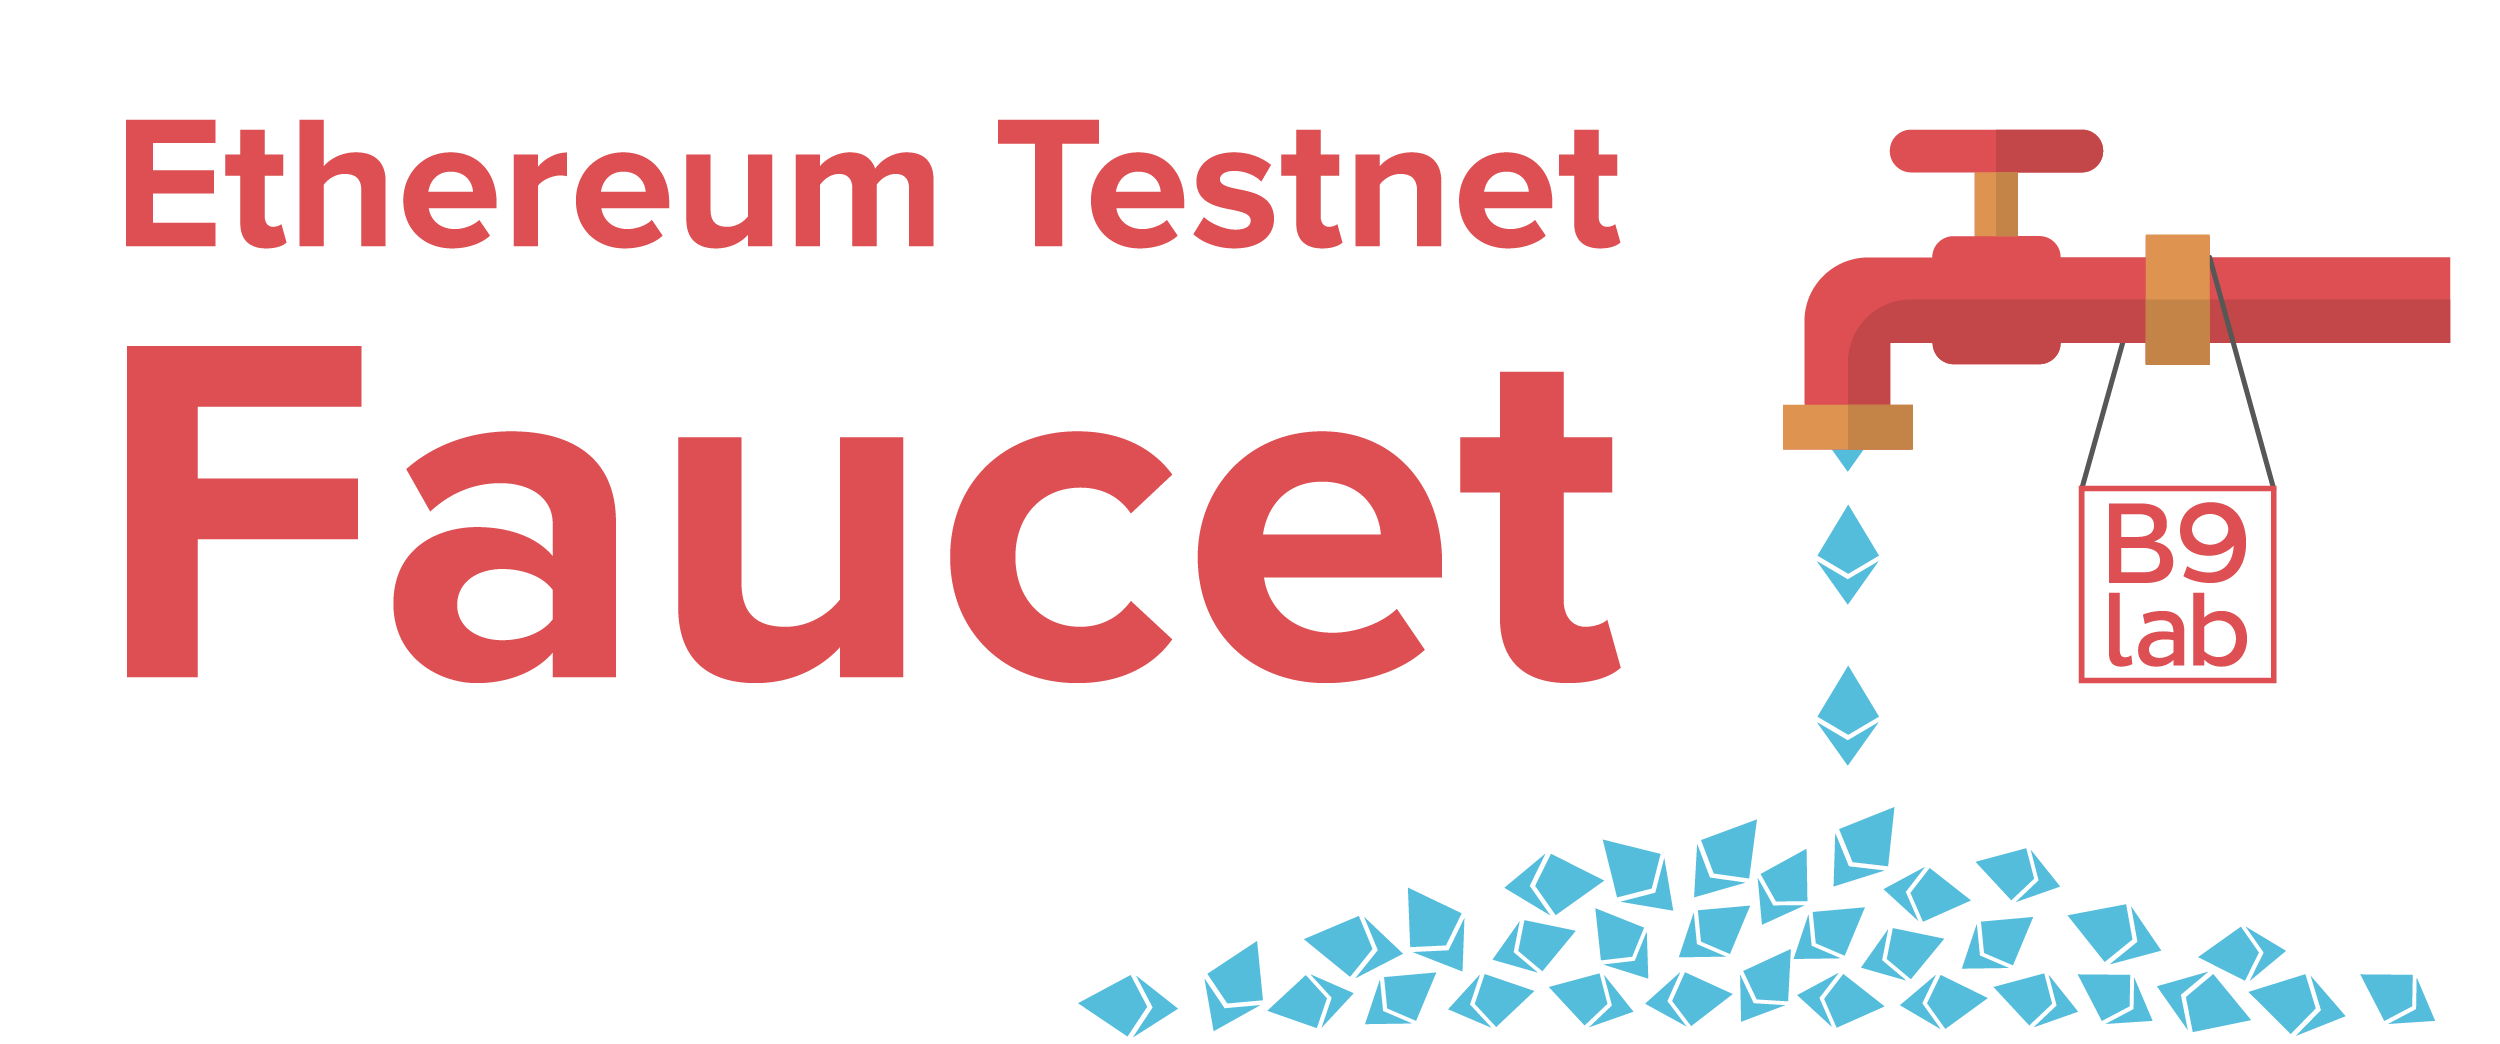 Ethereum Testnet Faucet | by Edward Hall | B9lab blog